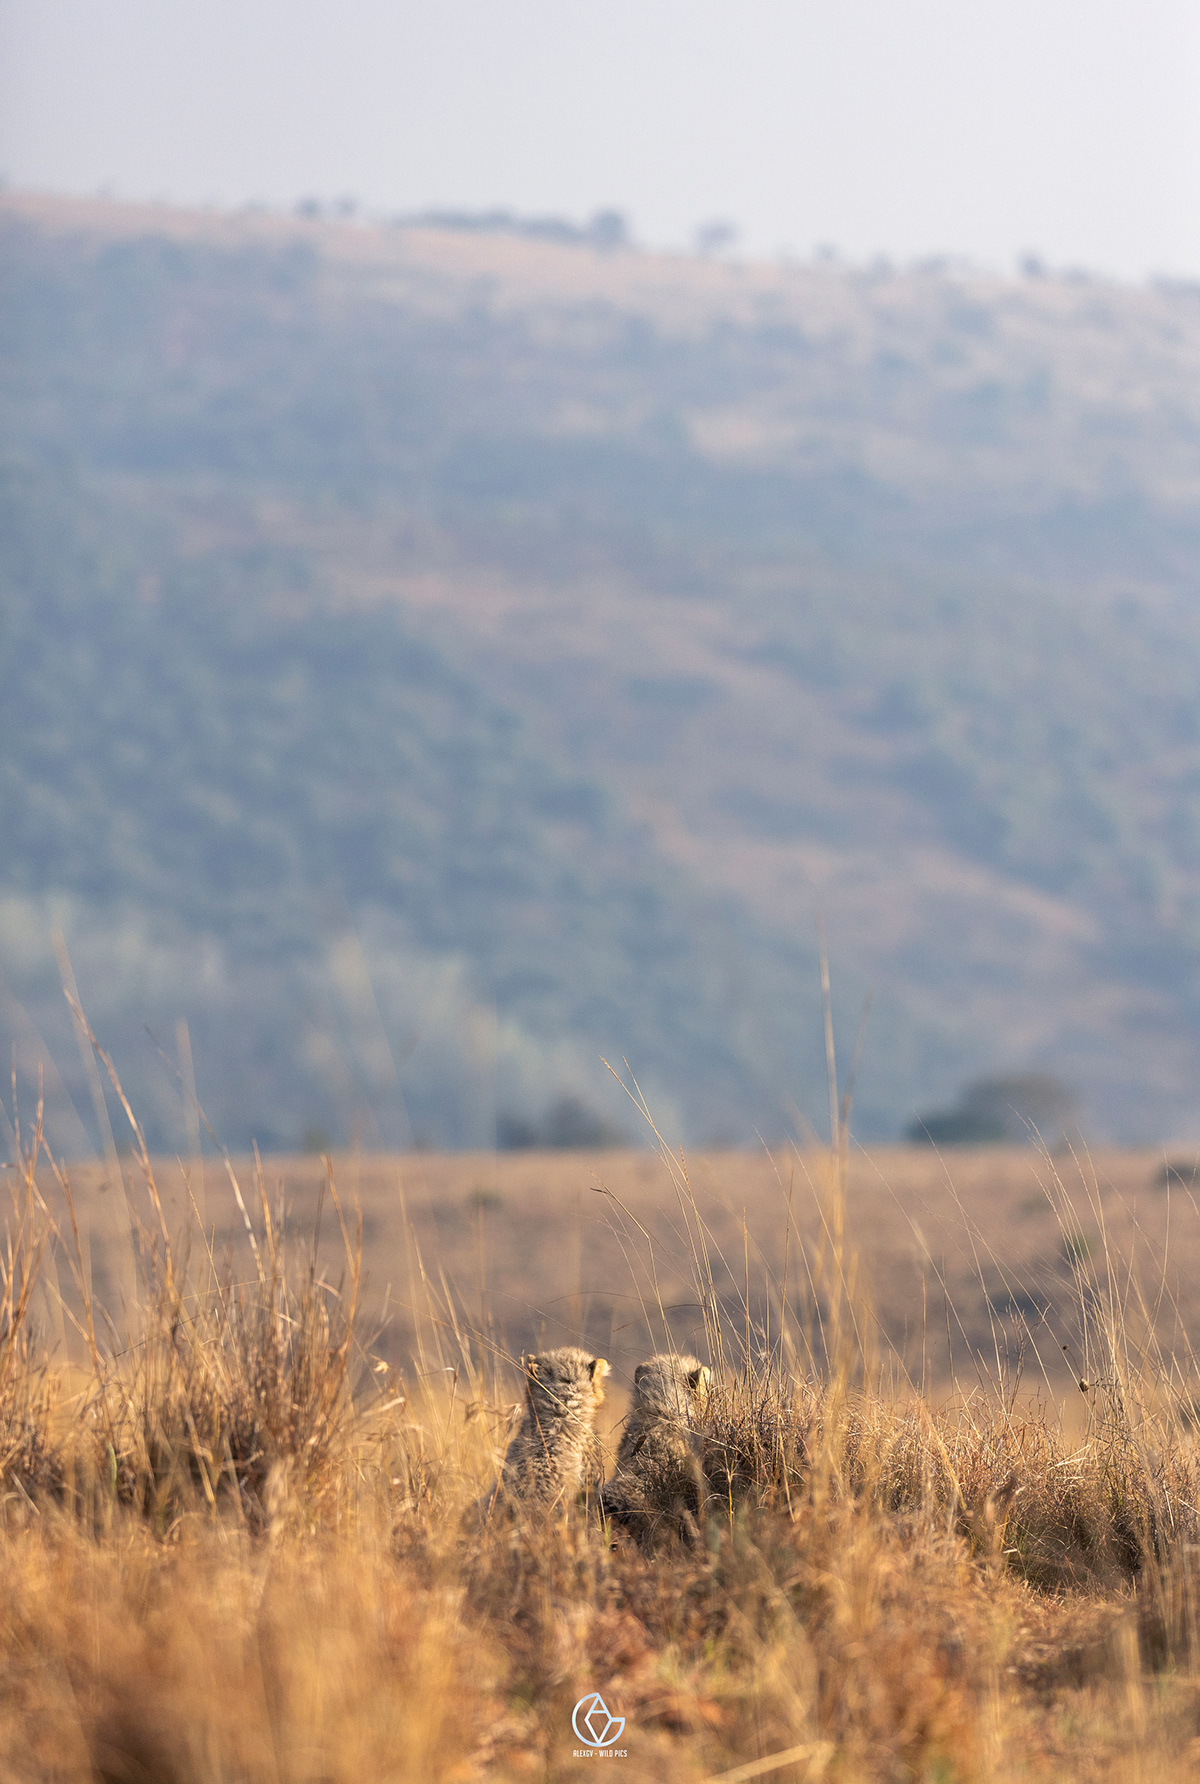 animal animalphotography cheetah Cheetahs conservation reintroduction Rewilding wildlife Wildlife photography